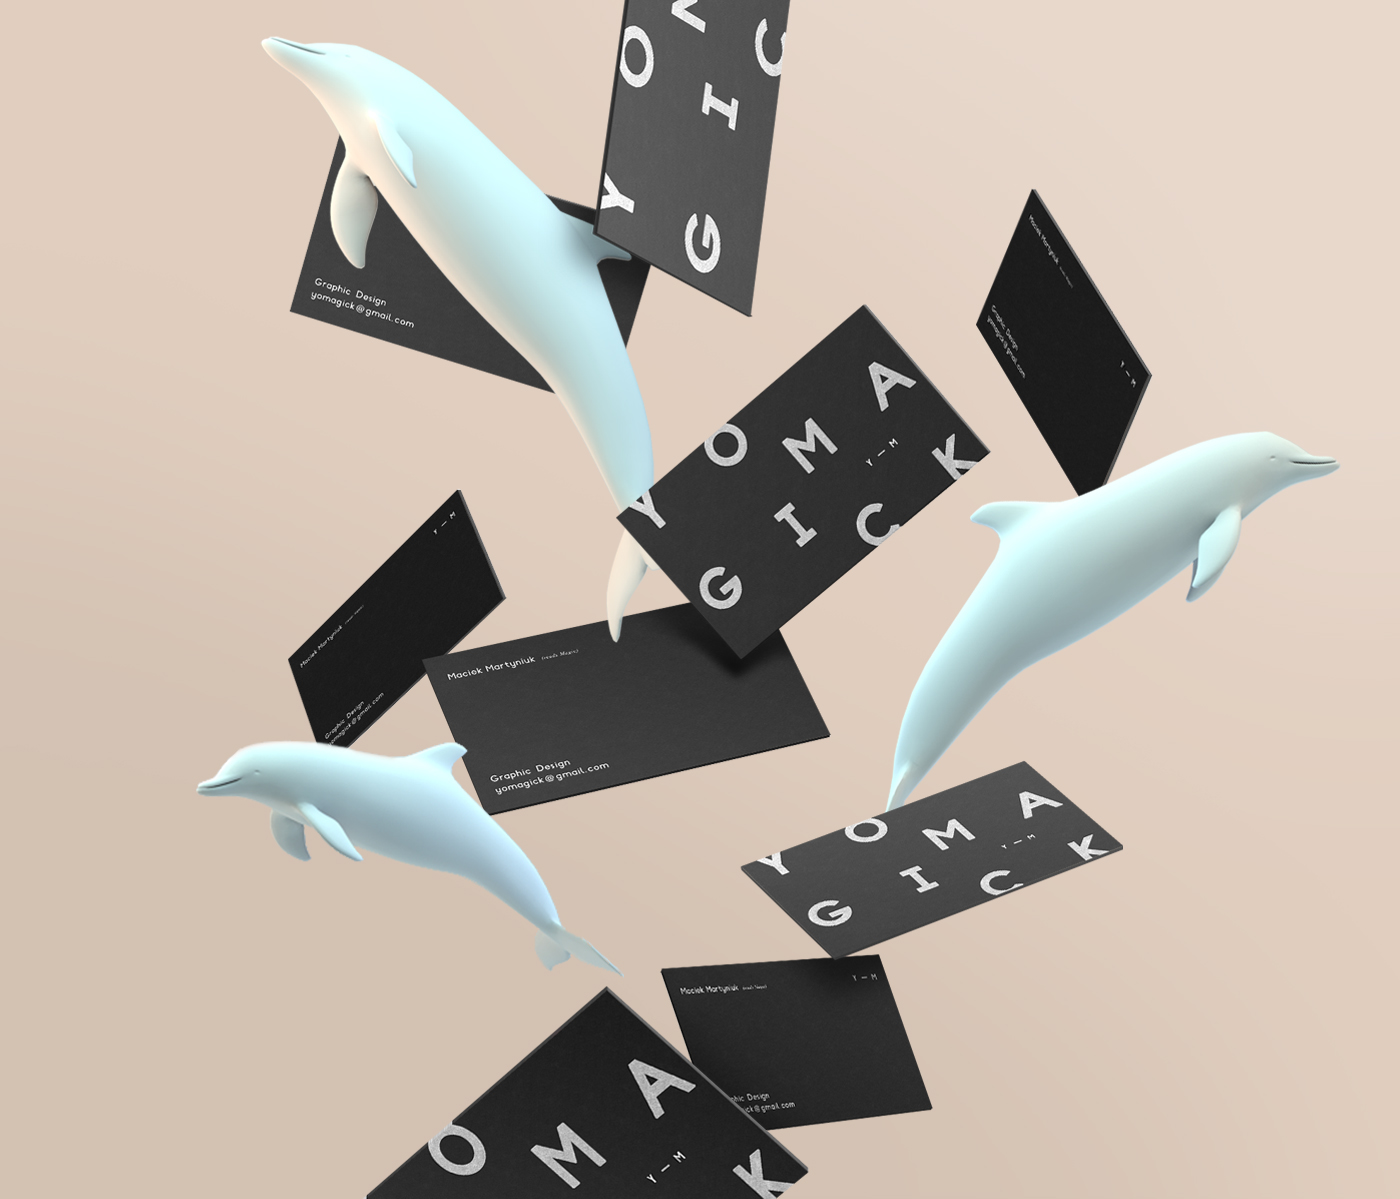 yomagick dublin Freelance design studio Stationery maciek martyniuk Business Cards business card Suprematism constructivism